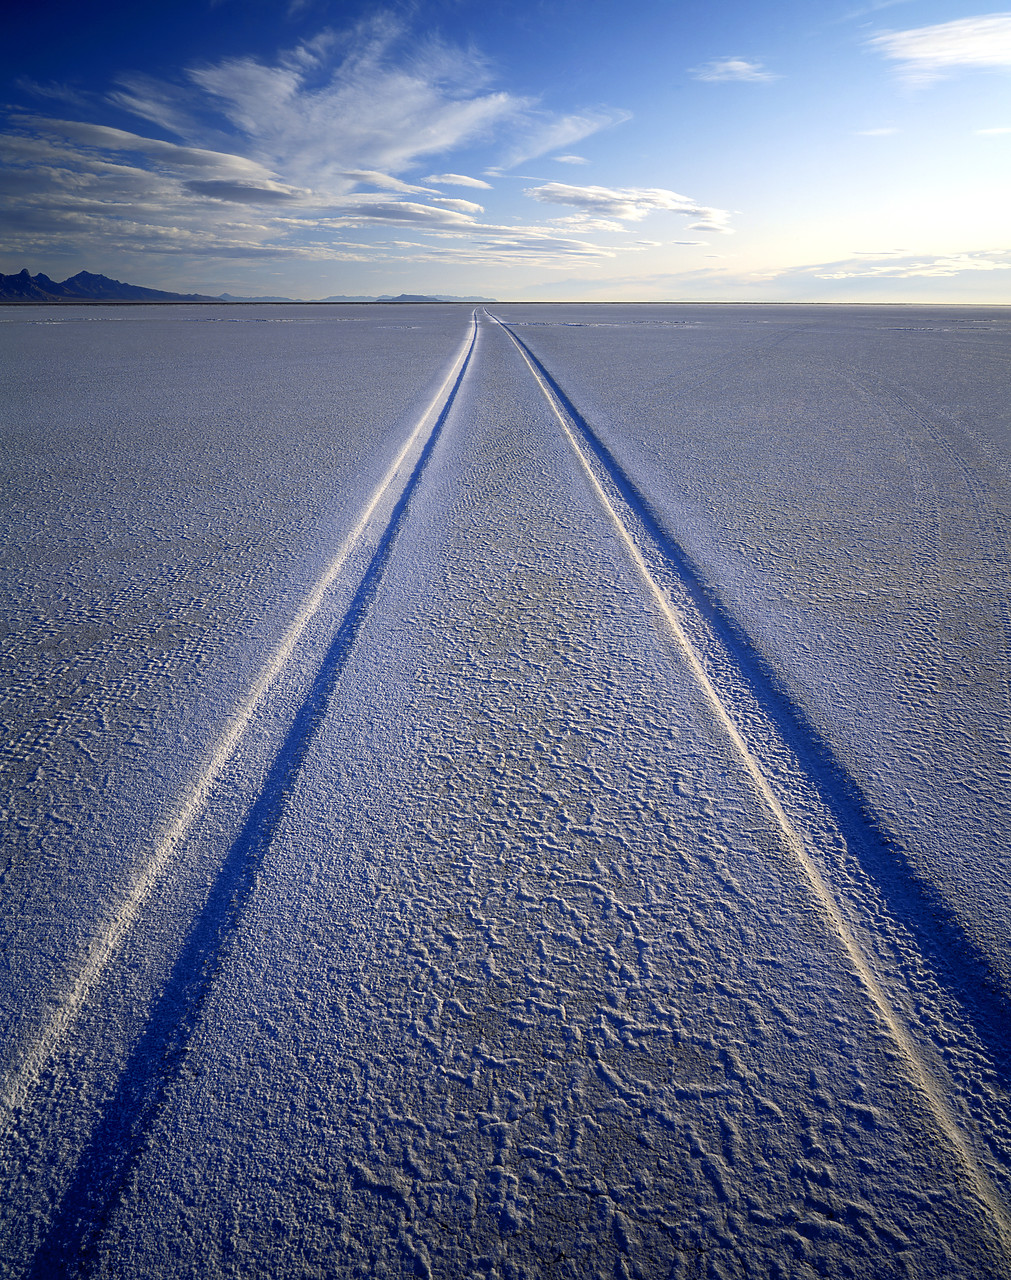 #913799 - 'The Road to Nowhere', Bonneville Salt Flats, Utah, USA